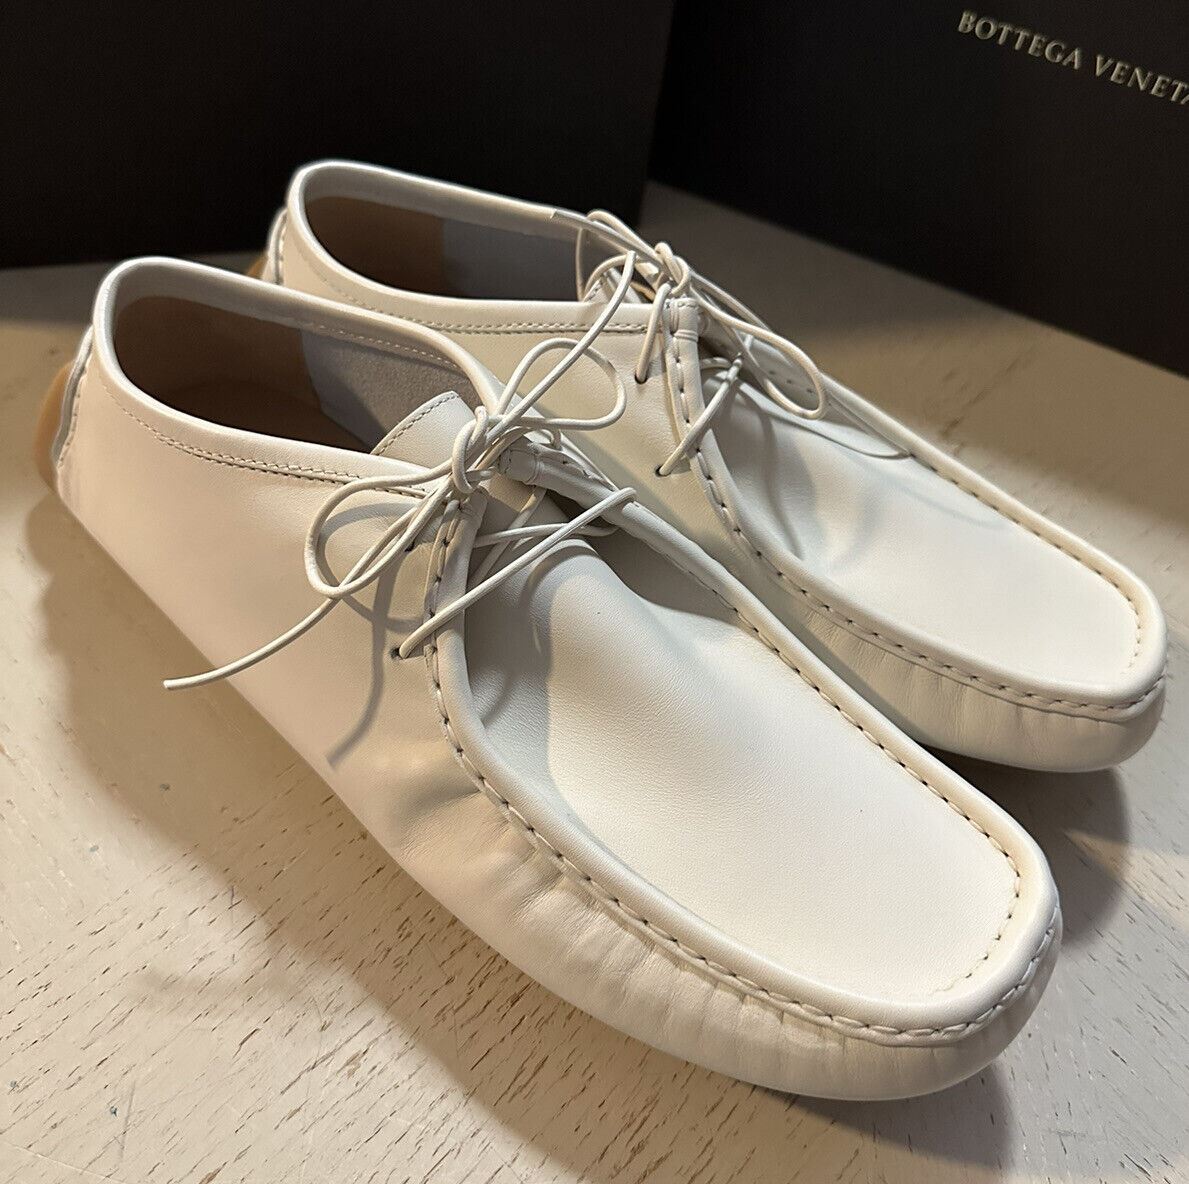 New $760 Bottega Venetta Men Leather Driver Loafers Shoes Cream 9.5 US/42.5 Eu